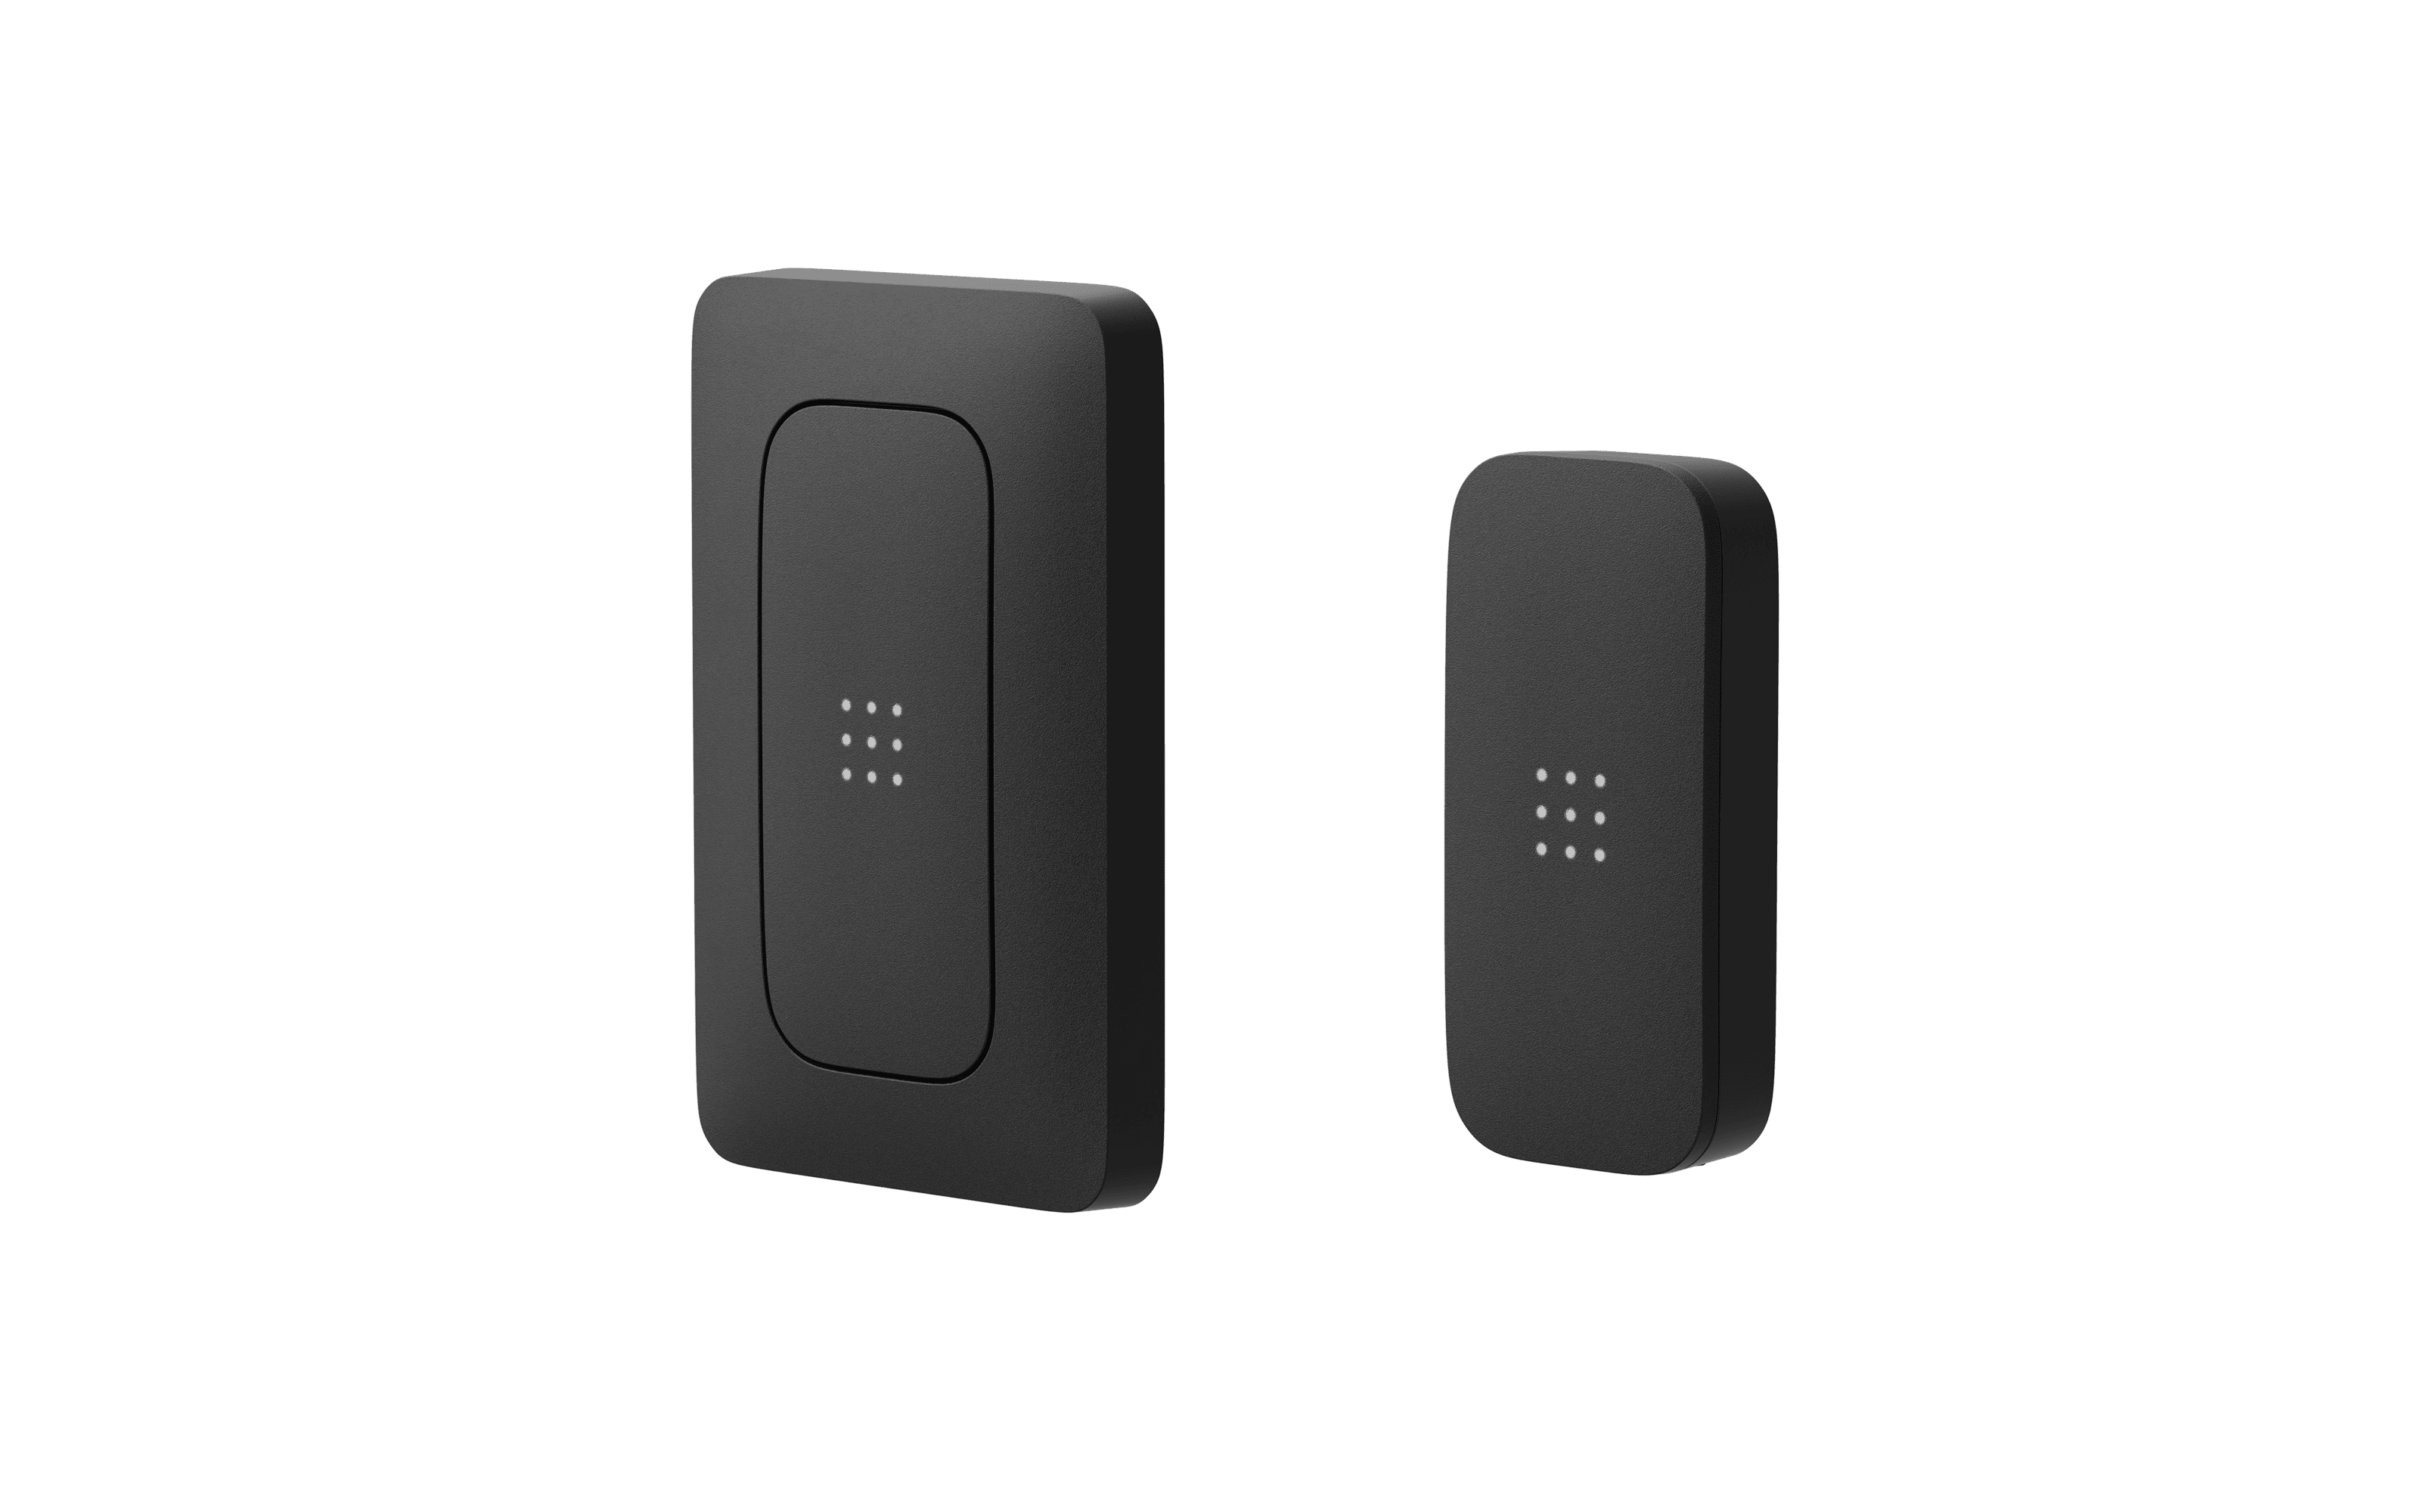 Two versions of card reader, popular door security solution 